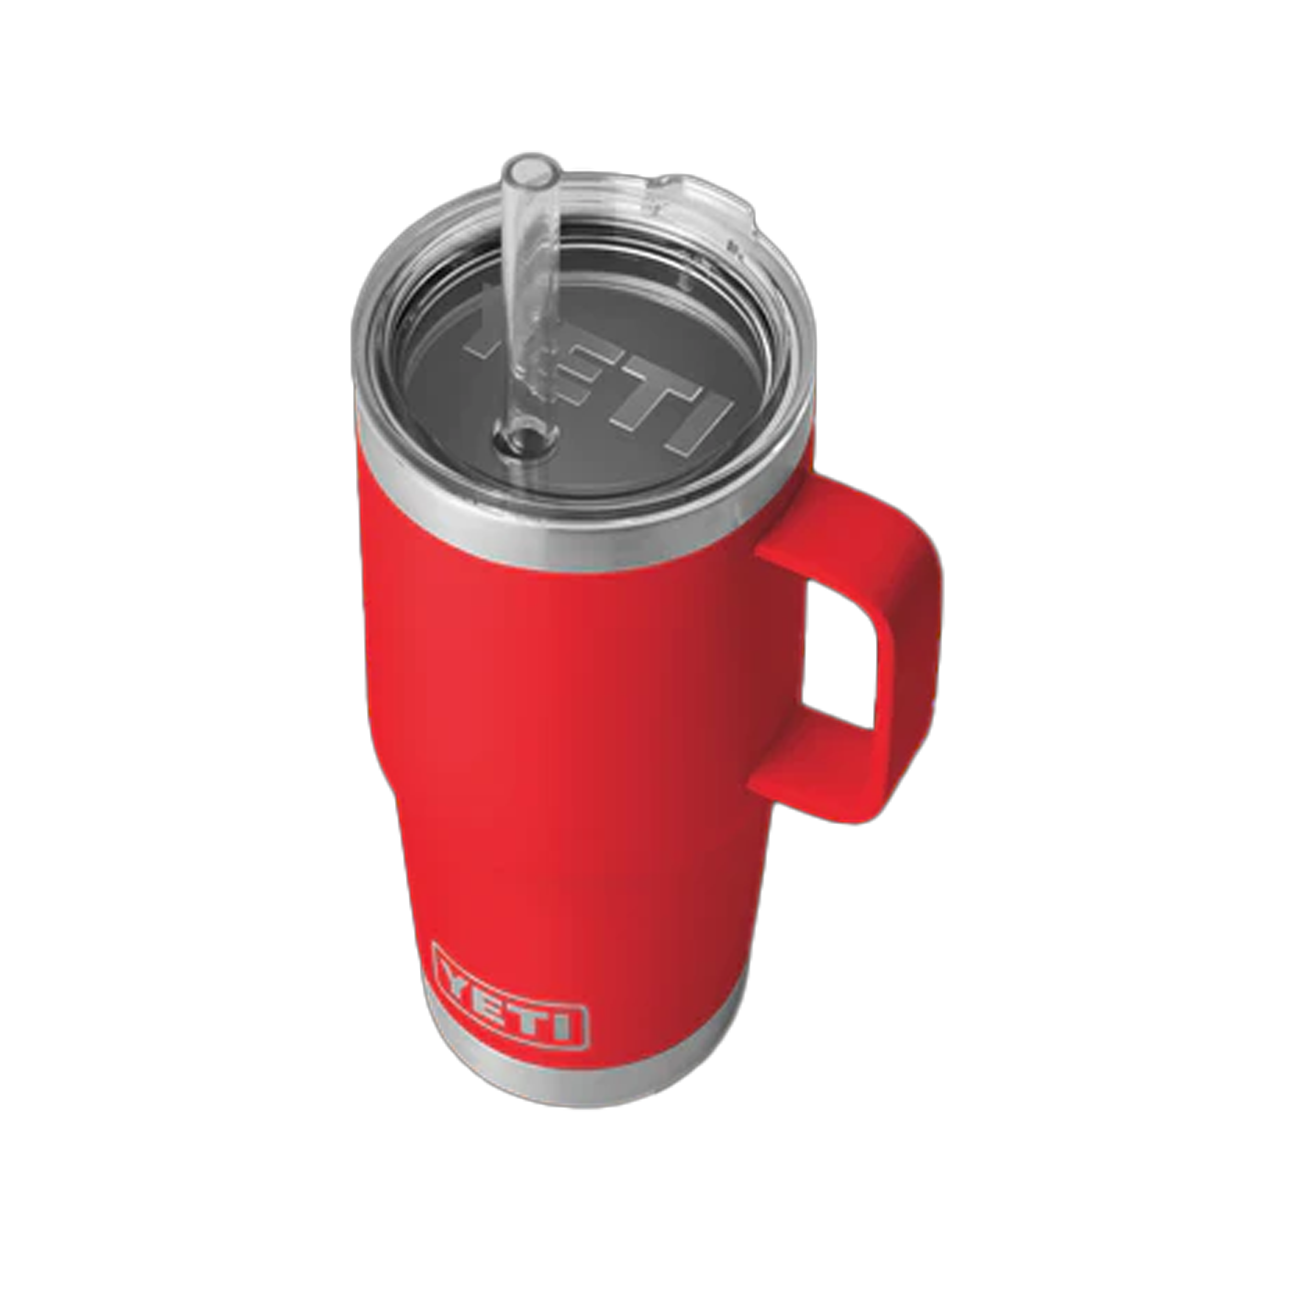 Yeti Rambler 25oz Straw Mug (Rot)  - Cheap Witzenberg Jordan Outlet